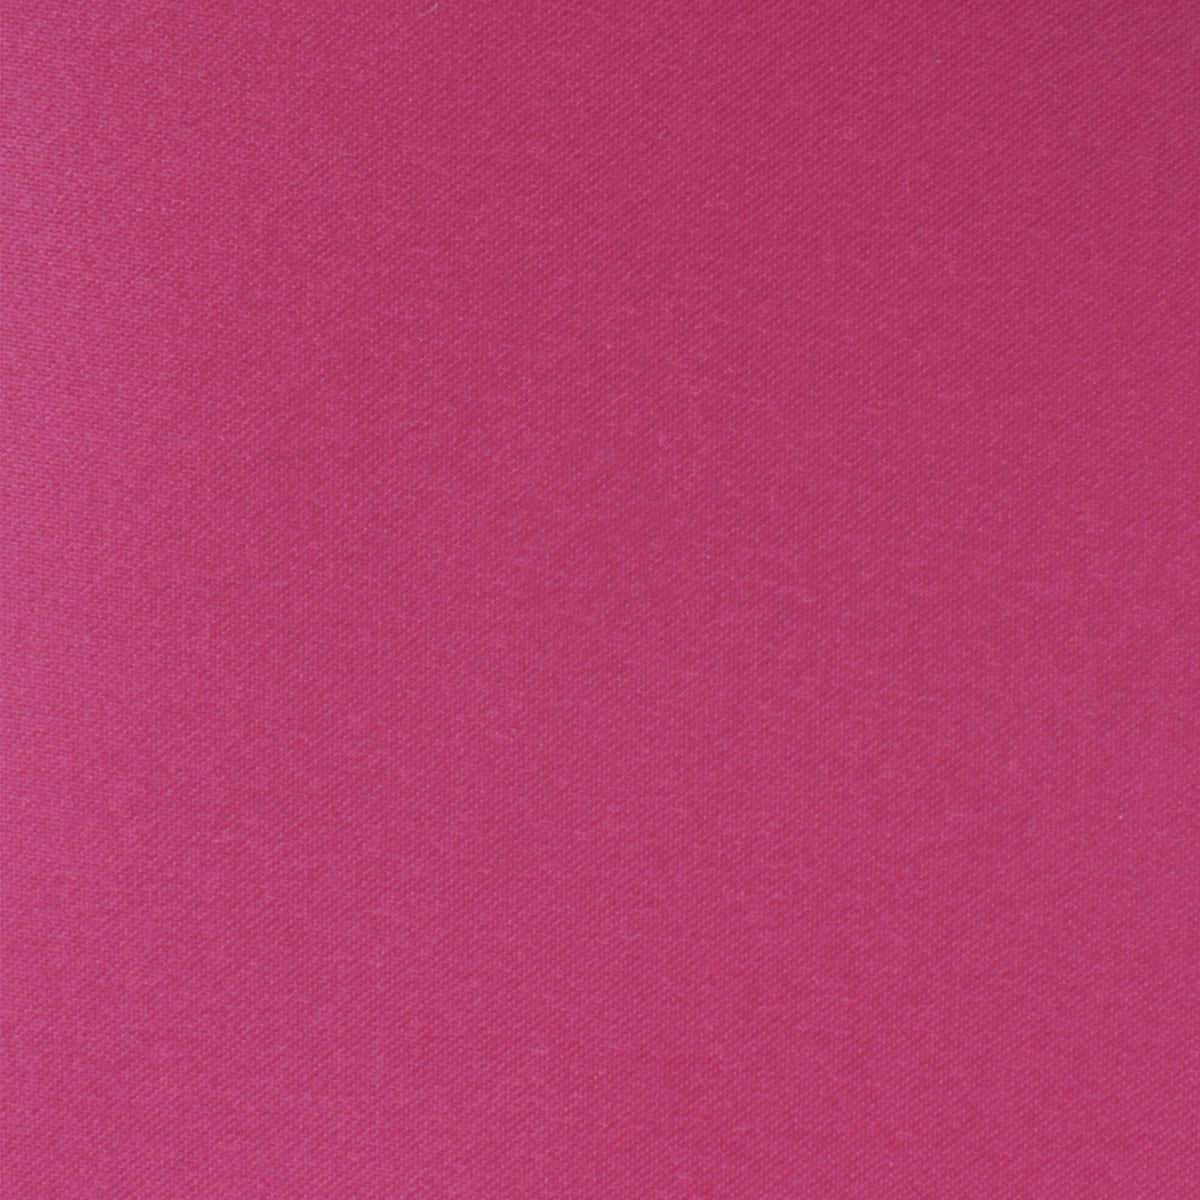 Magenta Pink Satin Fabric Swatch